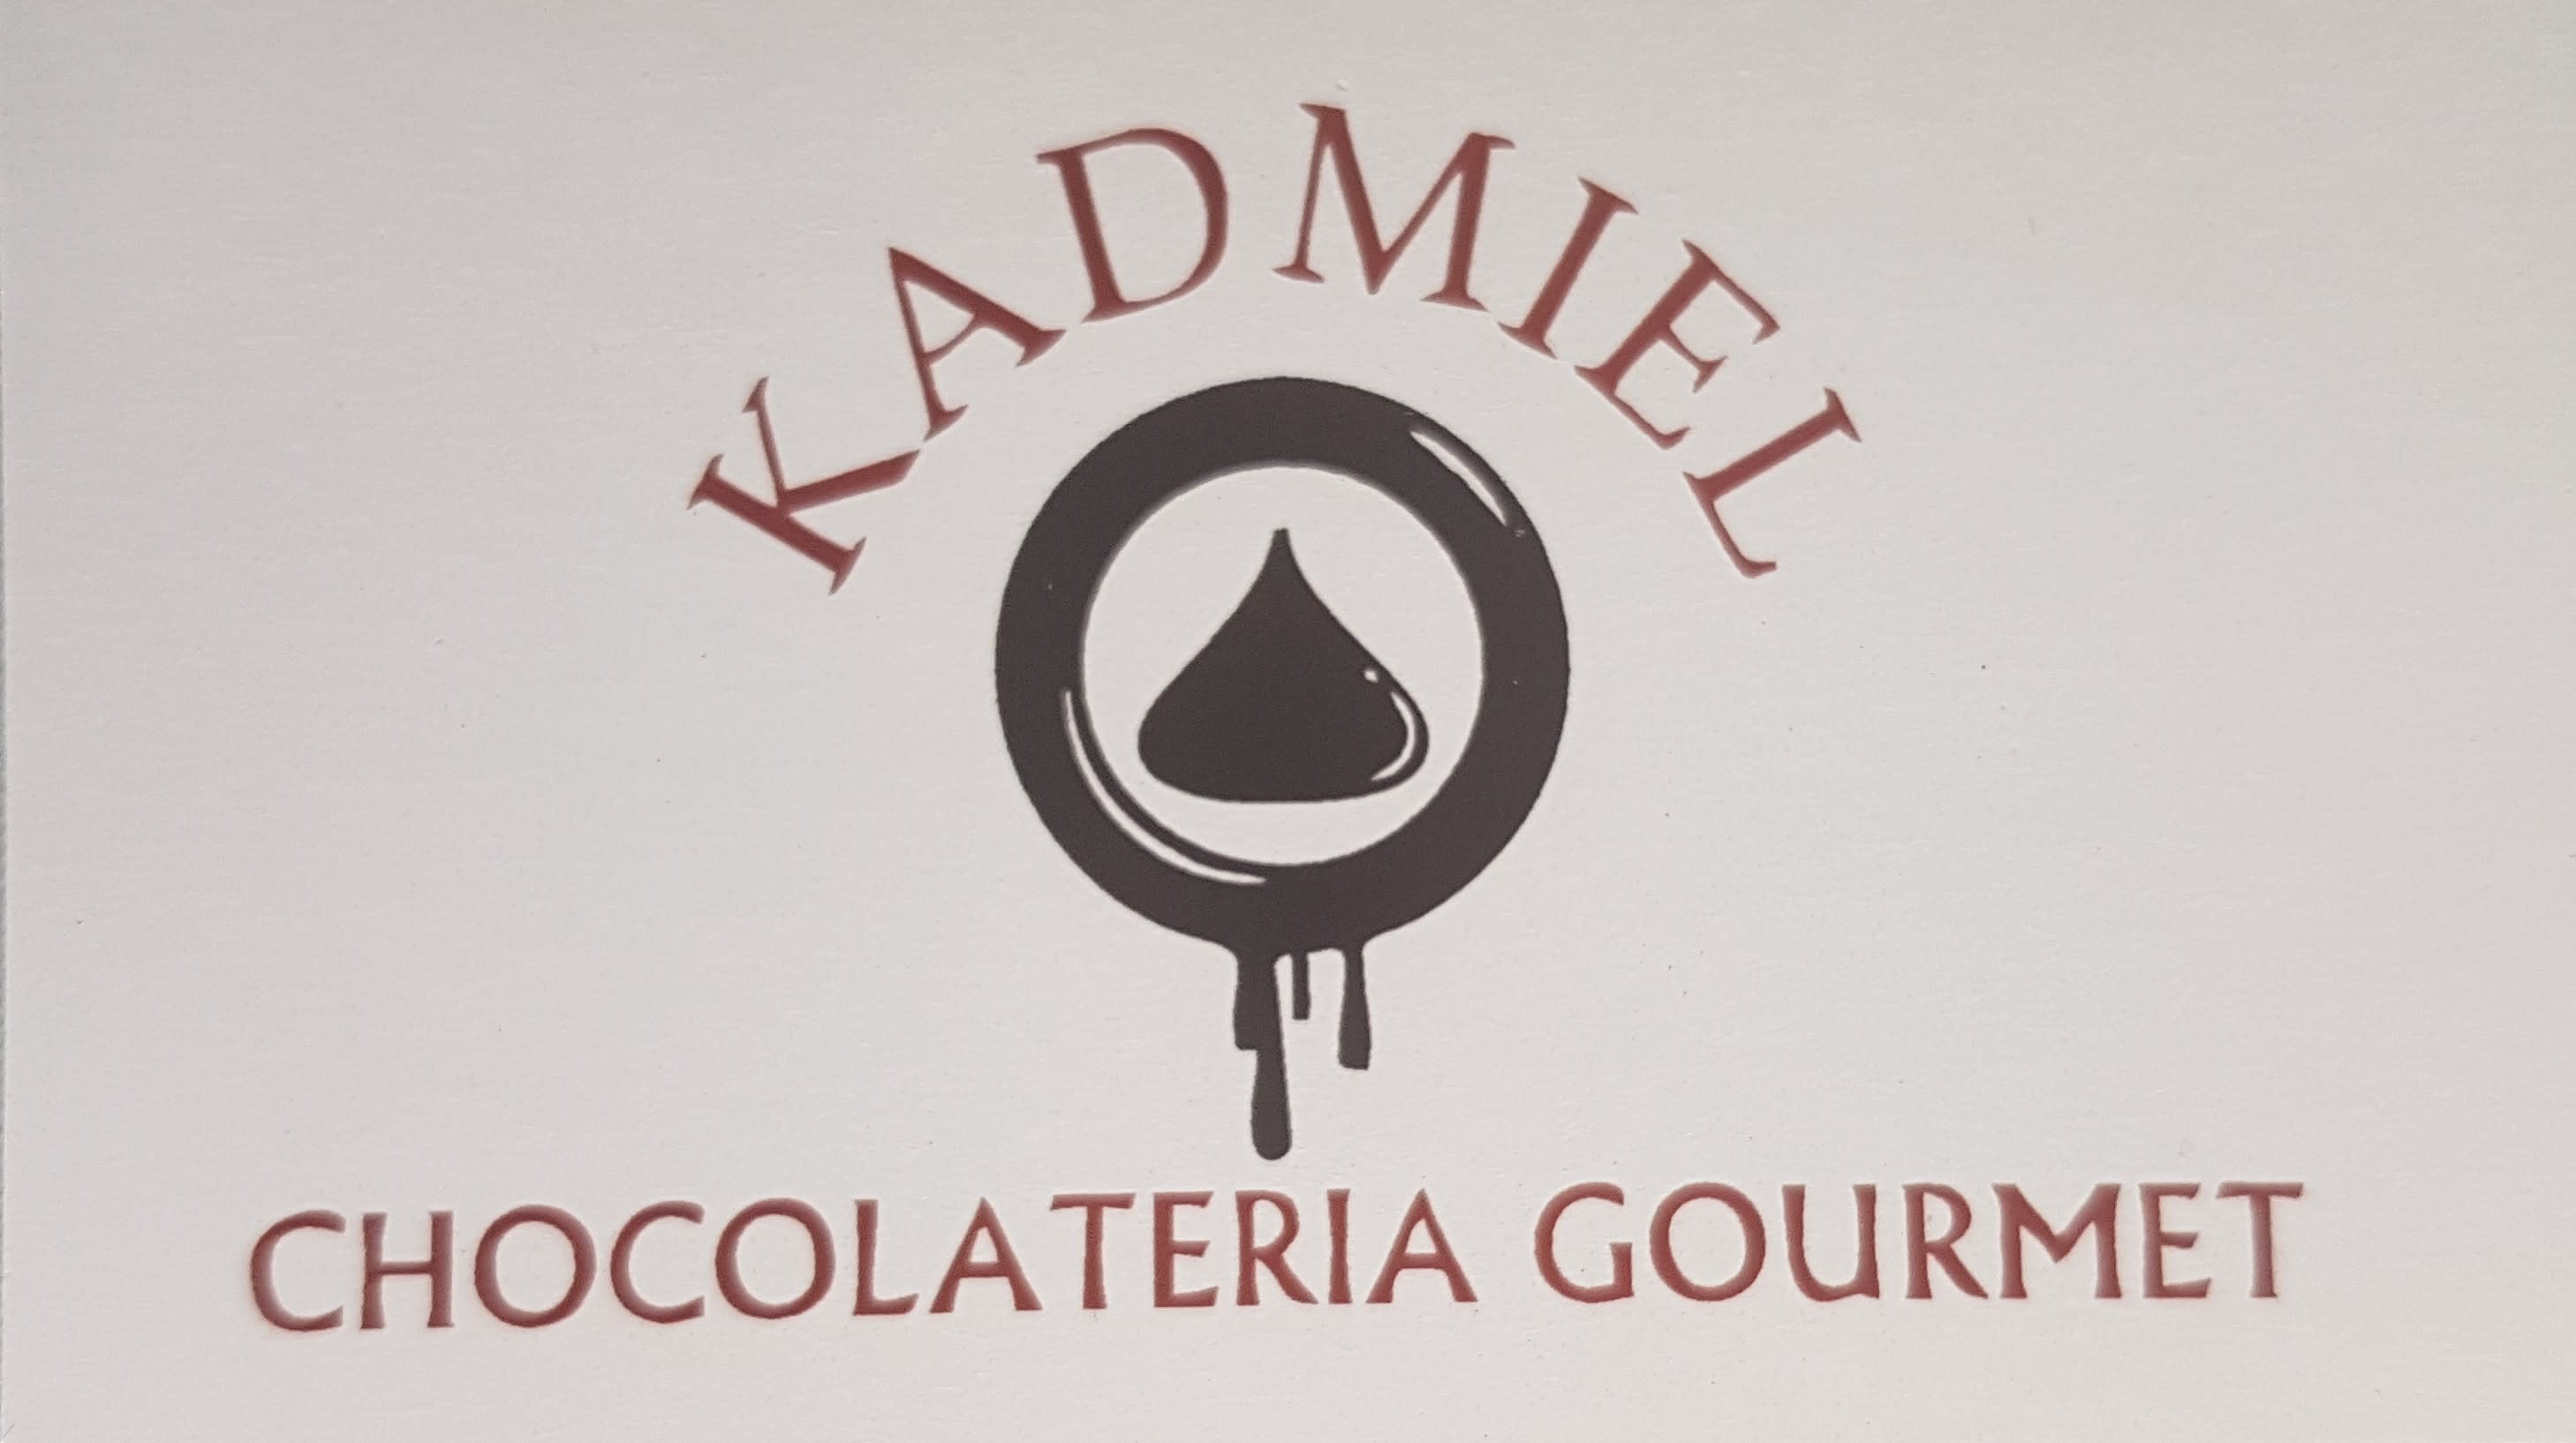 Kadmiel Chocolateria Gourmet